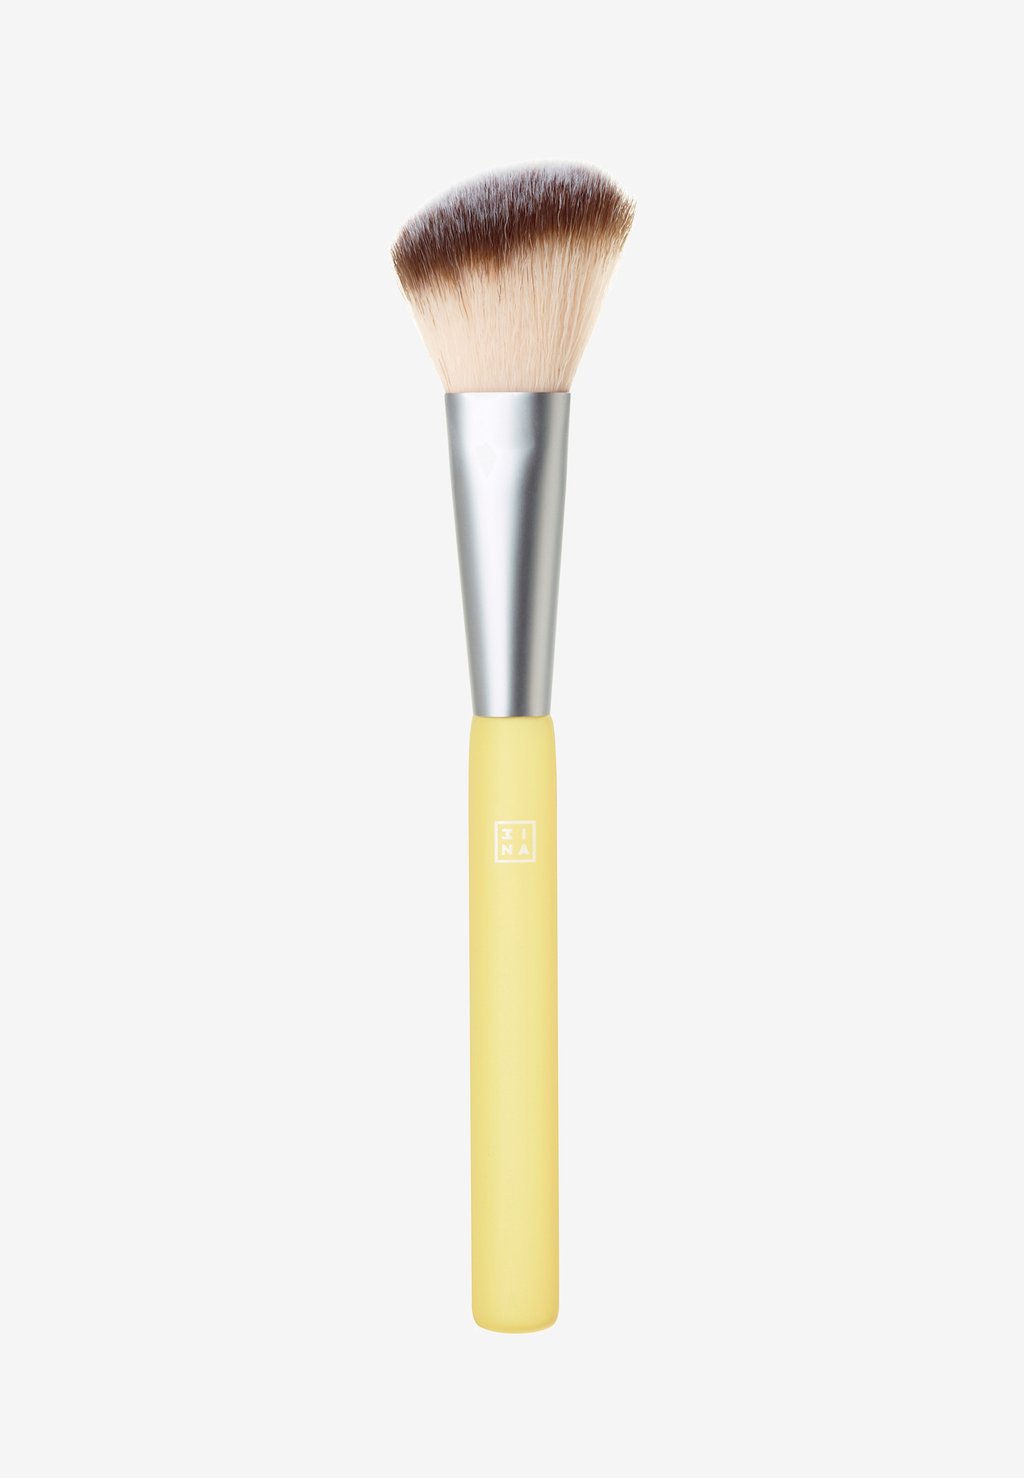 Кисти для макияжа The Angle Blush Brush 3ina, цвет neutral